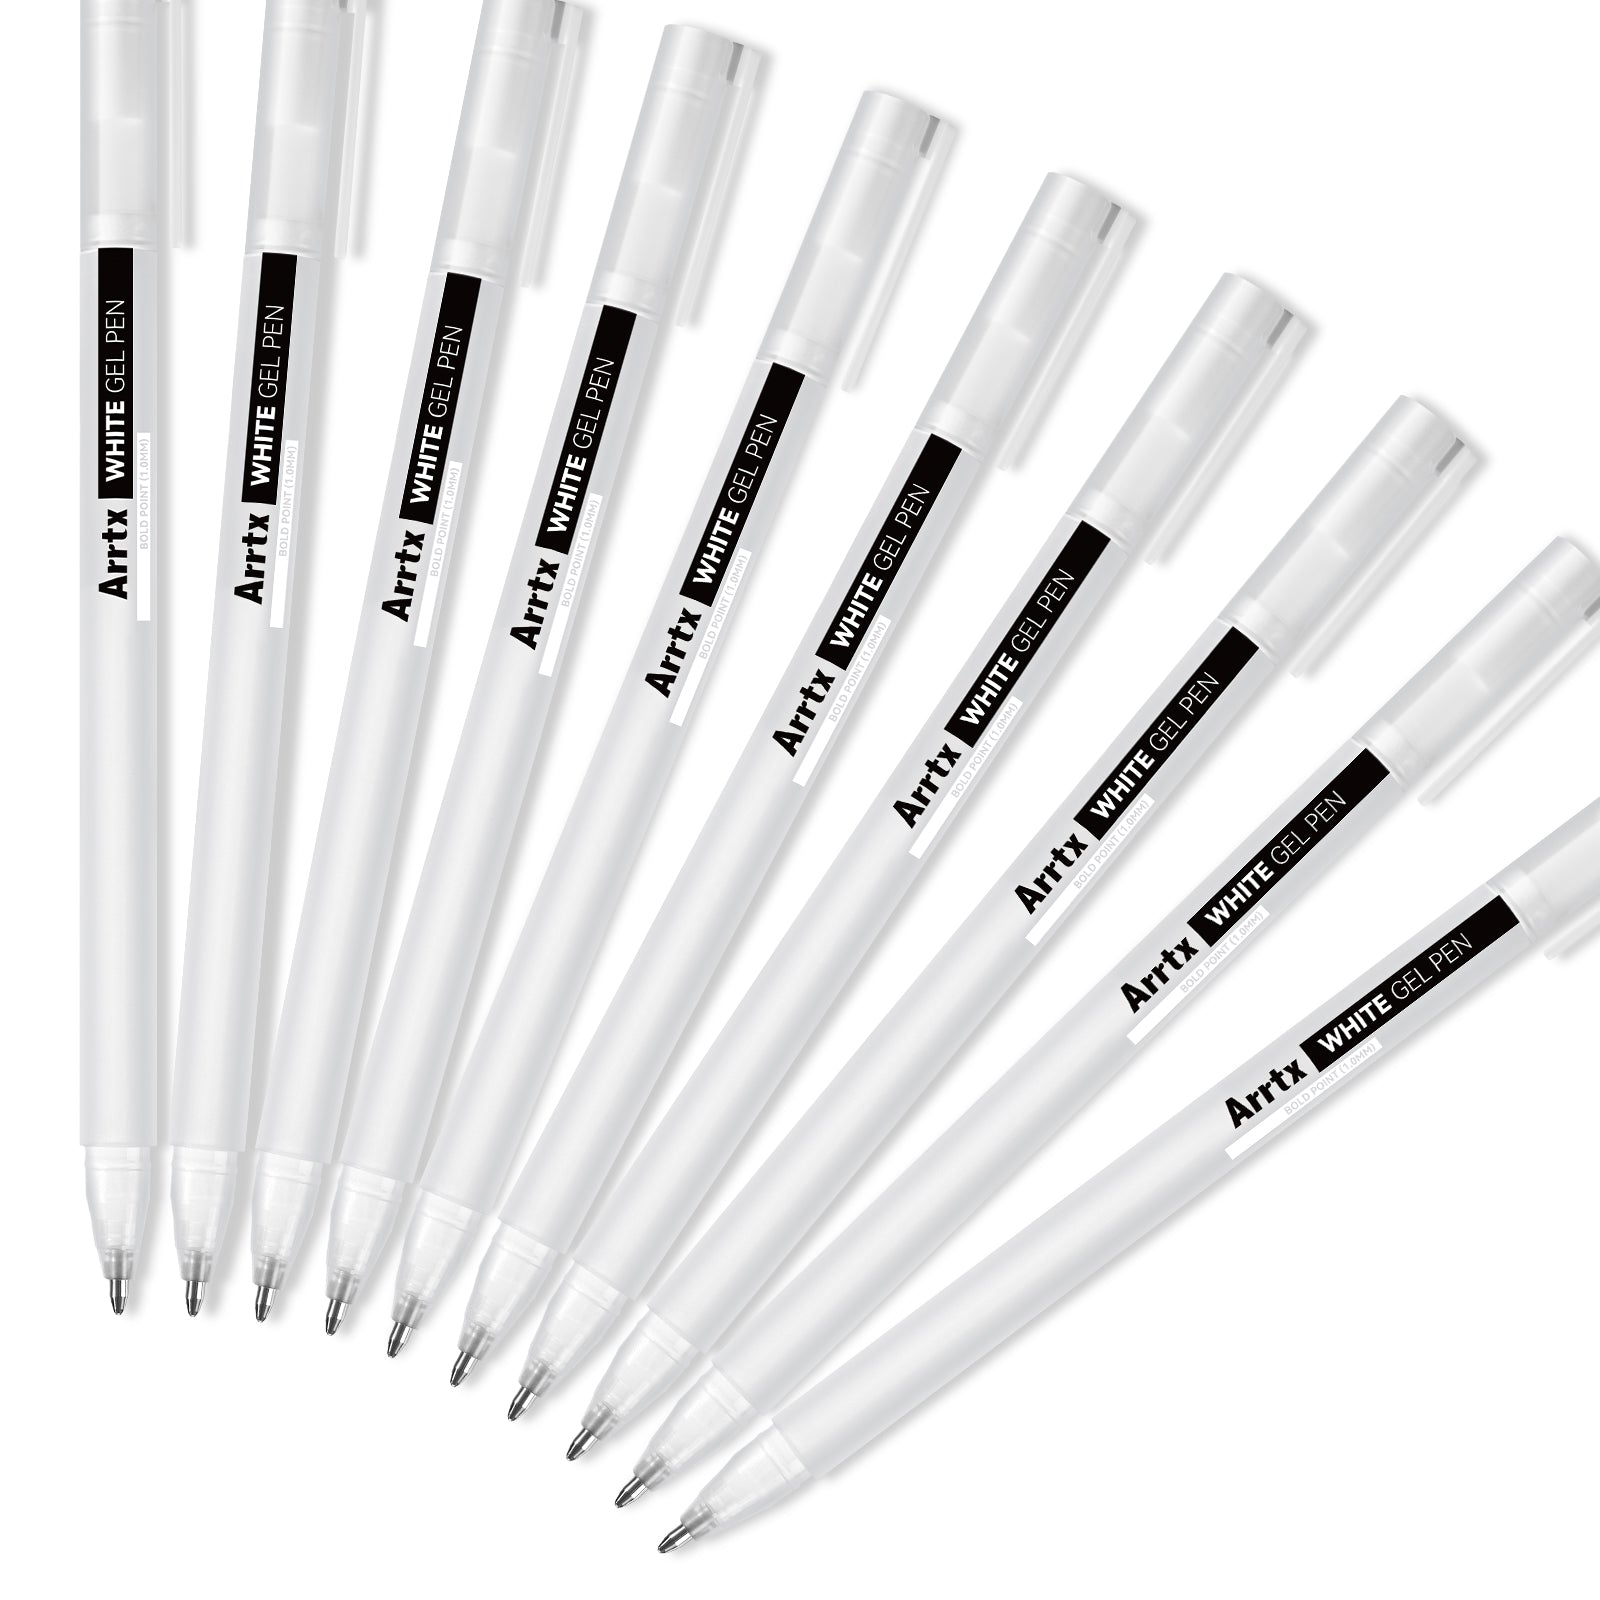 Arrtx Gel Pens 10 Pack White Color Large Capacity Ink Pens